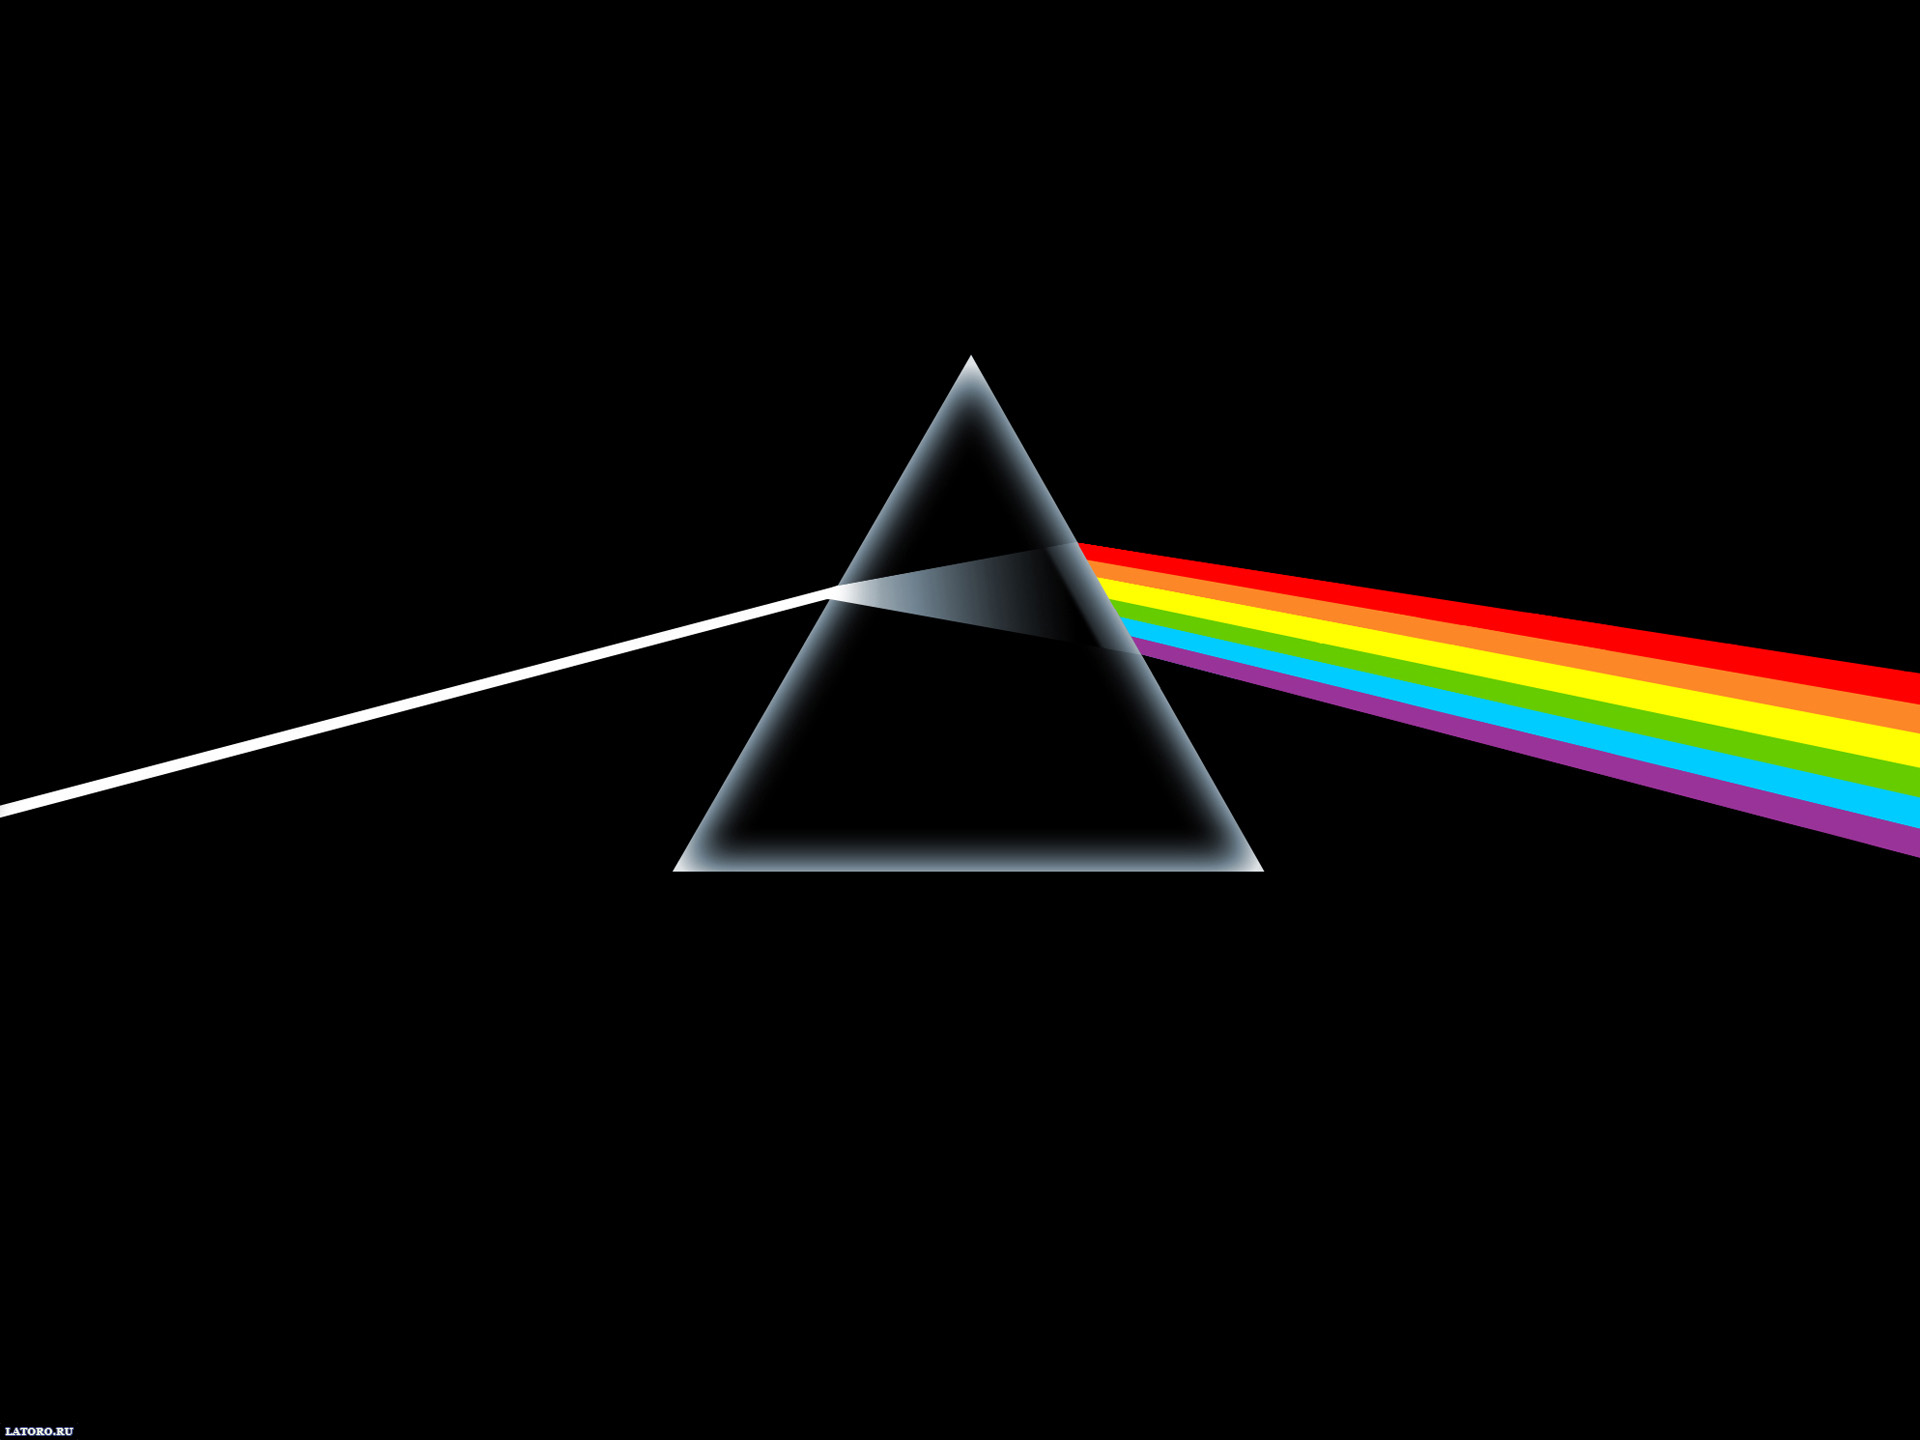 50 Pink Floyd Wallpapers Screensavers On Wallpapersafari